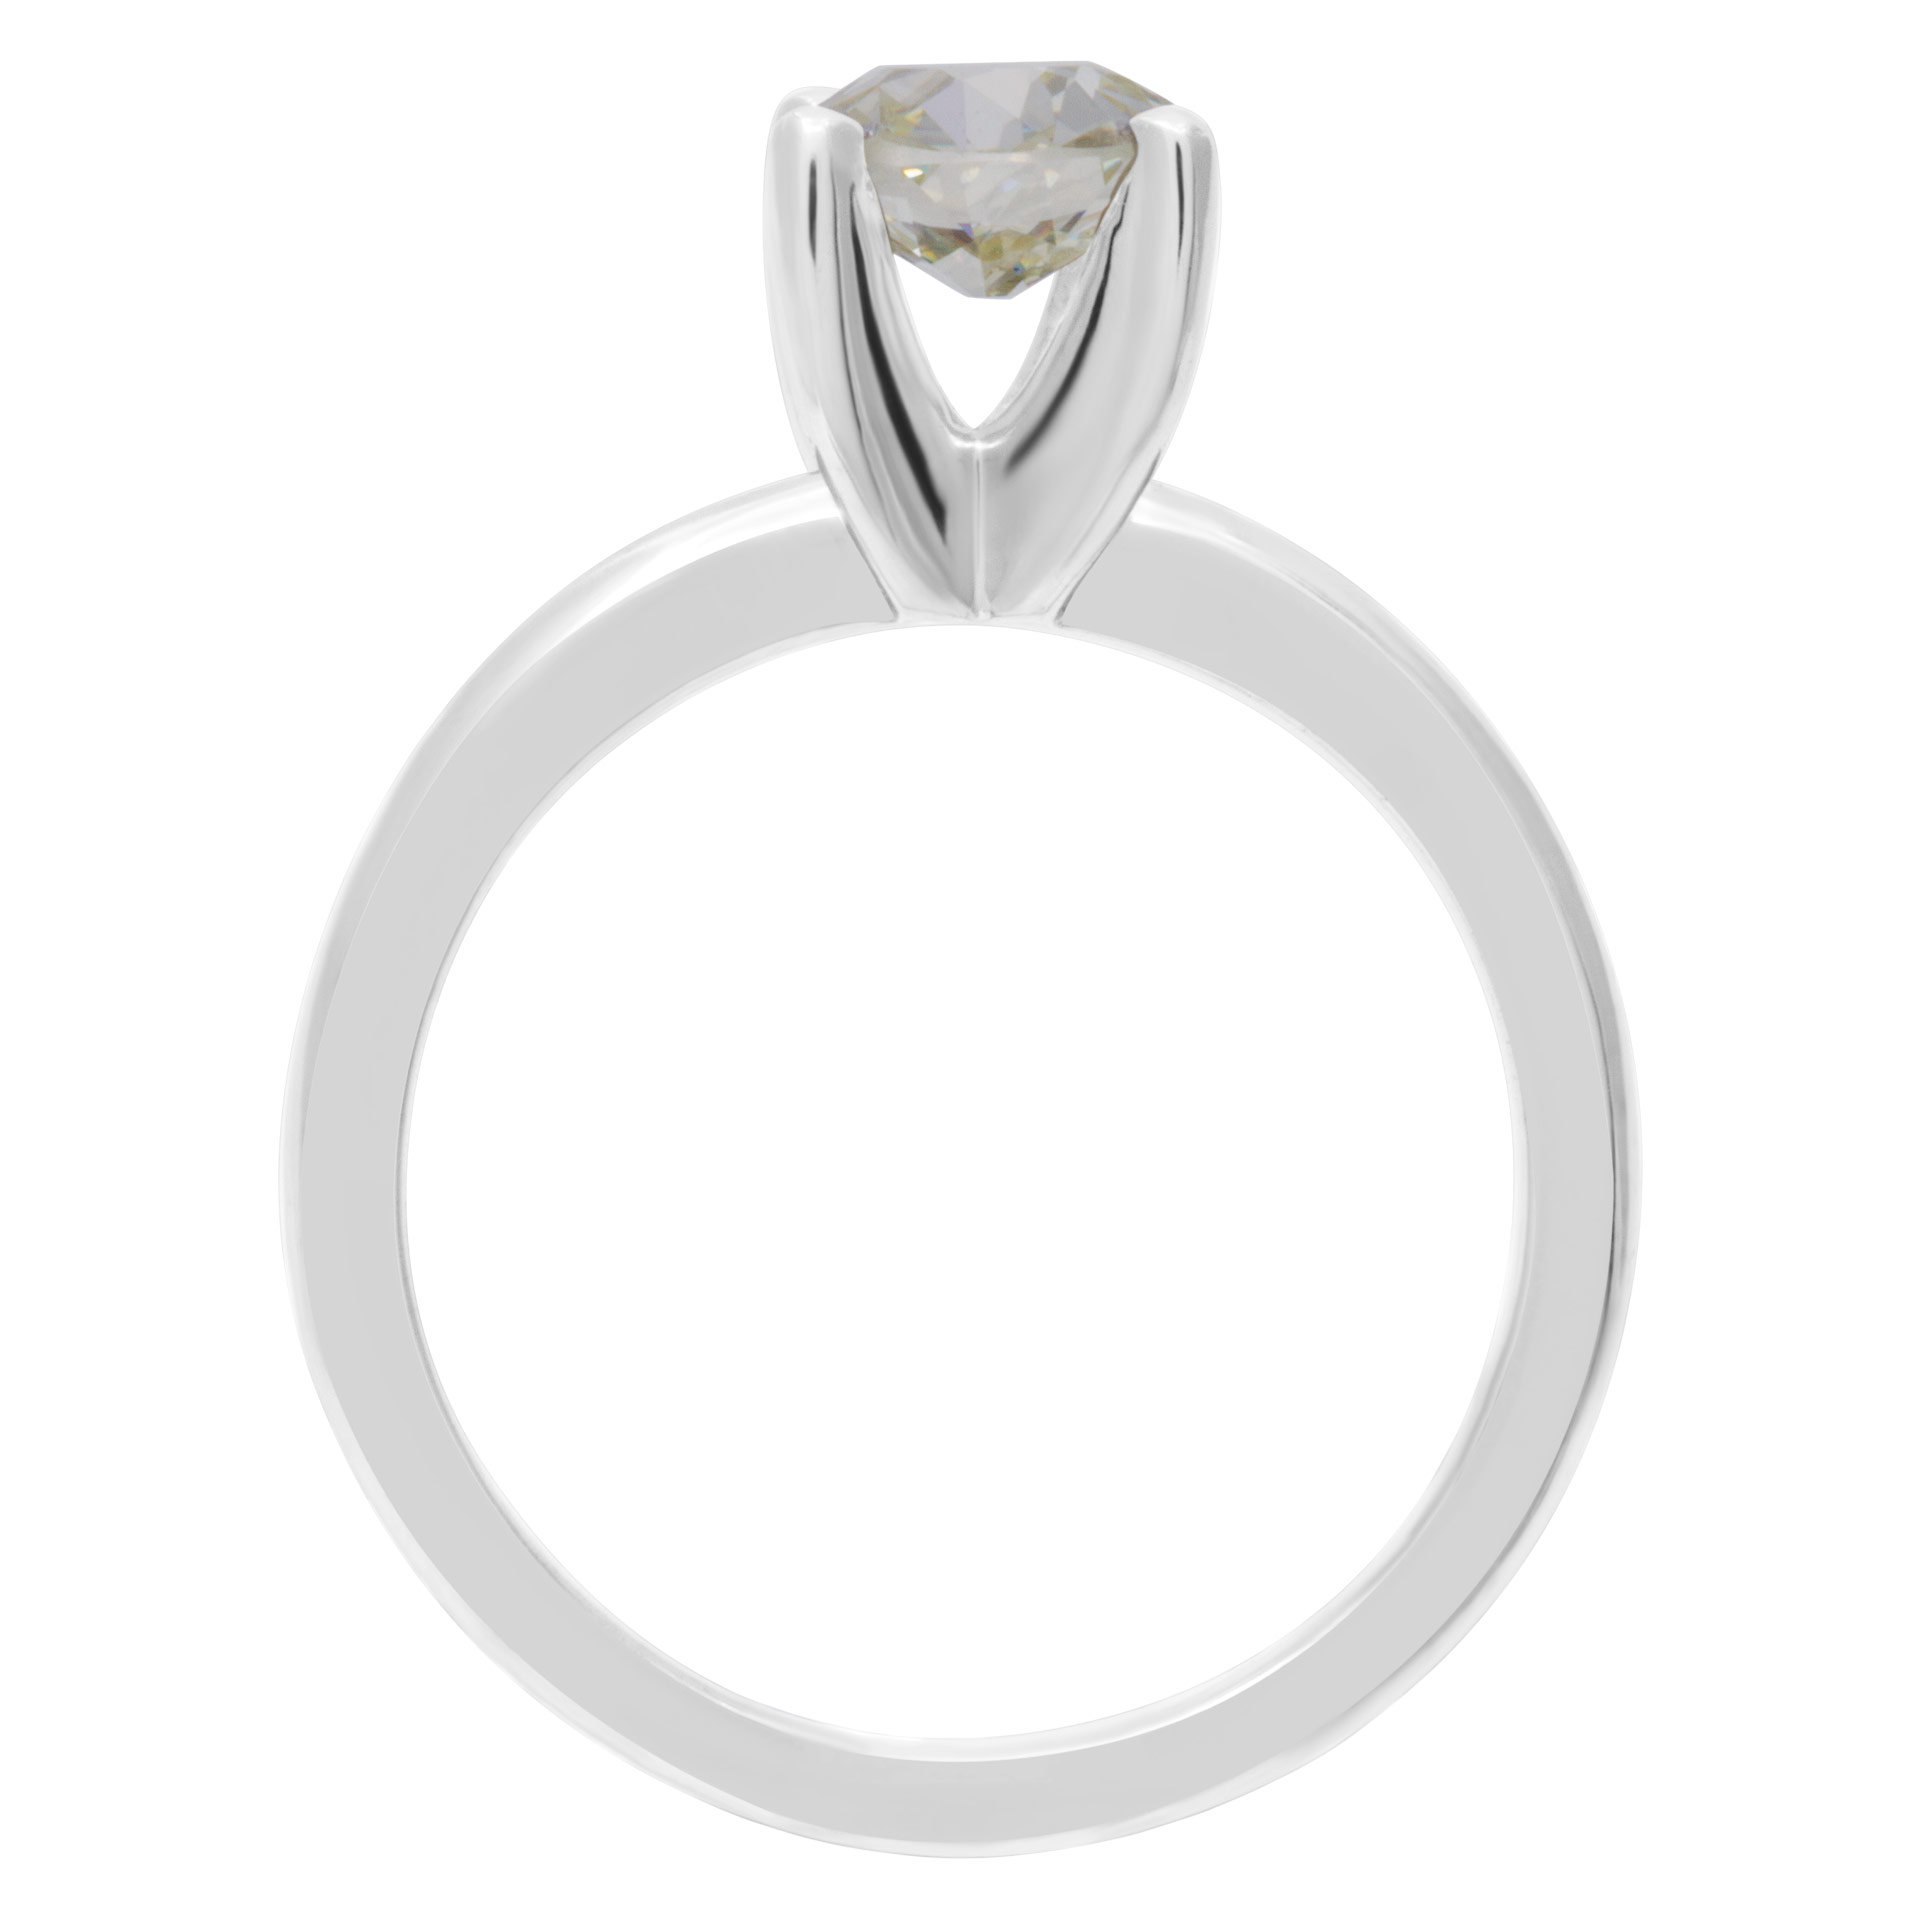 GIA certified old europeam brilliant cut diamond 1.09 carat (O to P range, VS1 clarity) solitaire ring set in platinum image 4